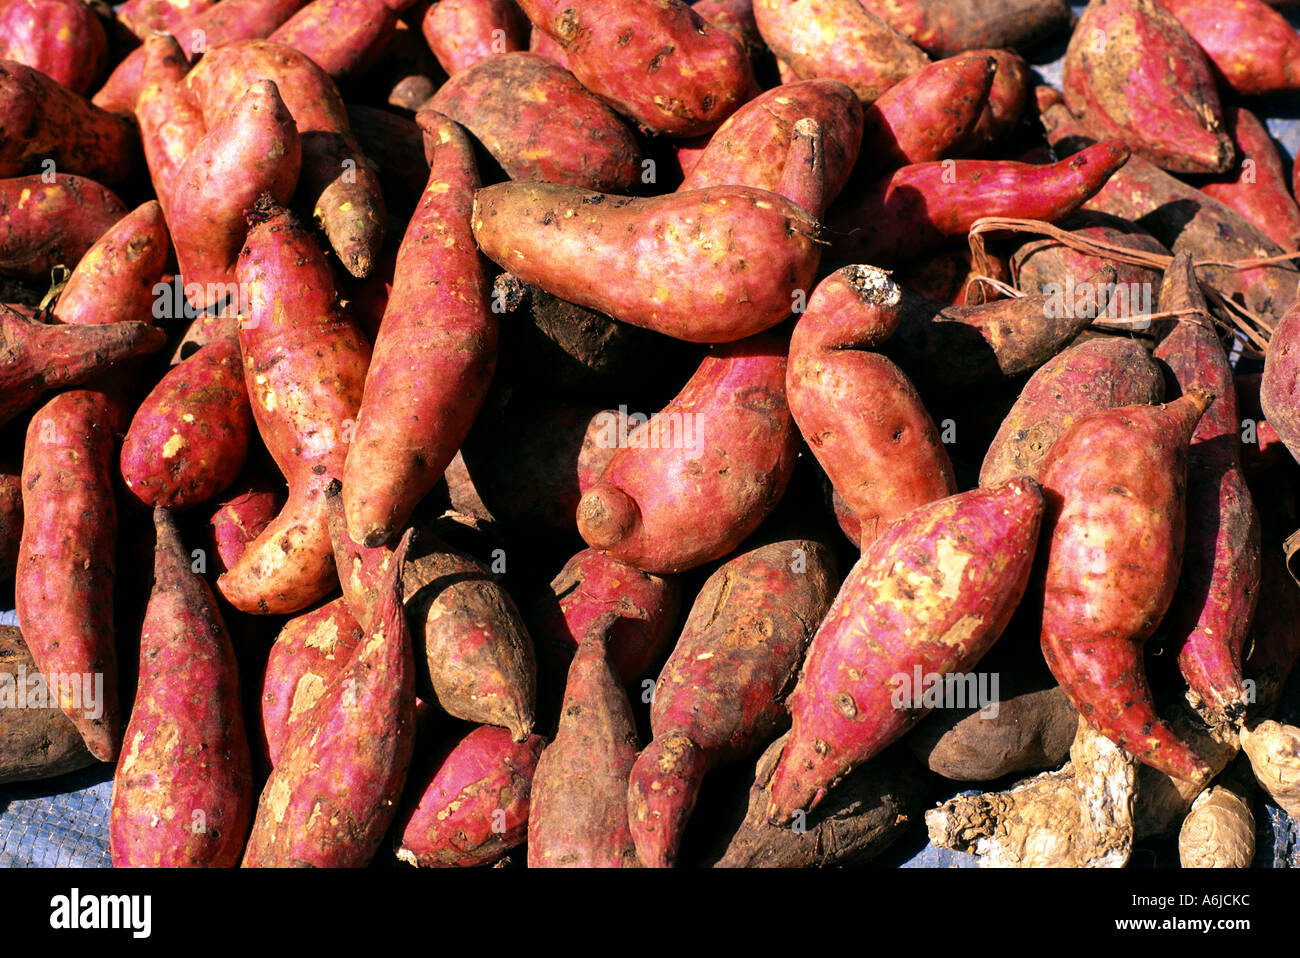 Caribbean Saint Martin Island Sweet potatoes Stock Photo